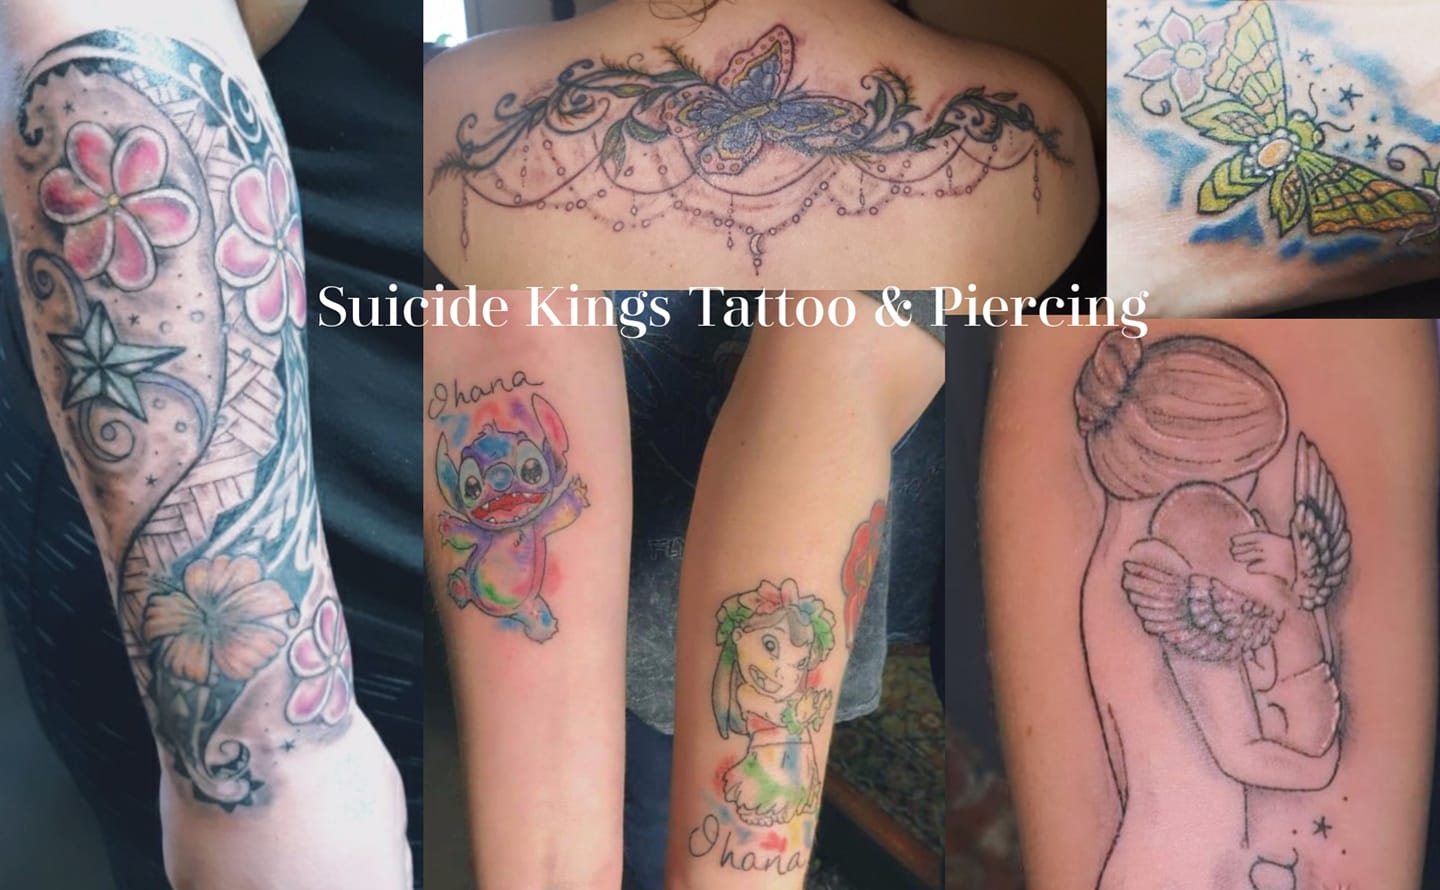 Suicide Kings Tattoo & Piercing 6251 Iola Ln, Farina Illinois 62838